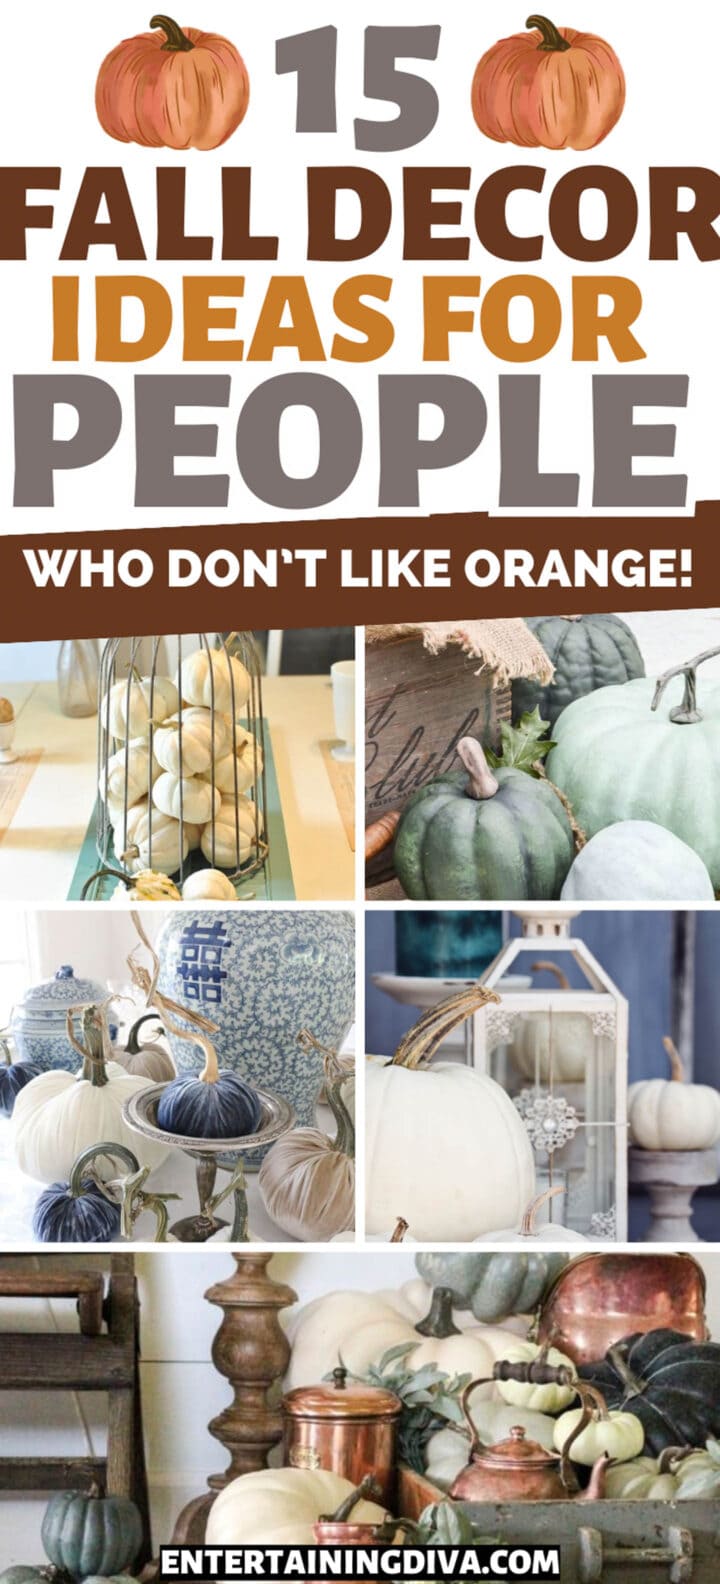 15 fall home decor ideas for people who don't like orange.